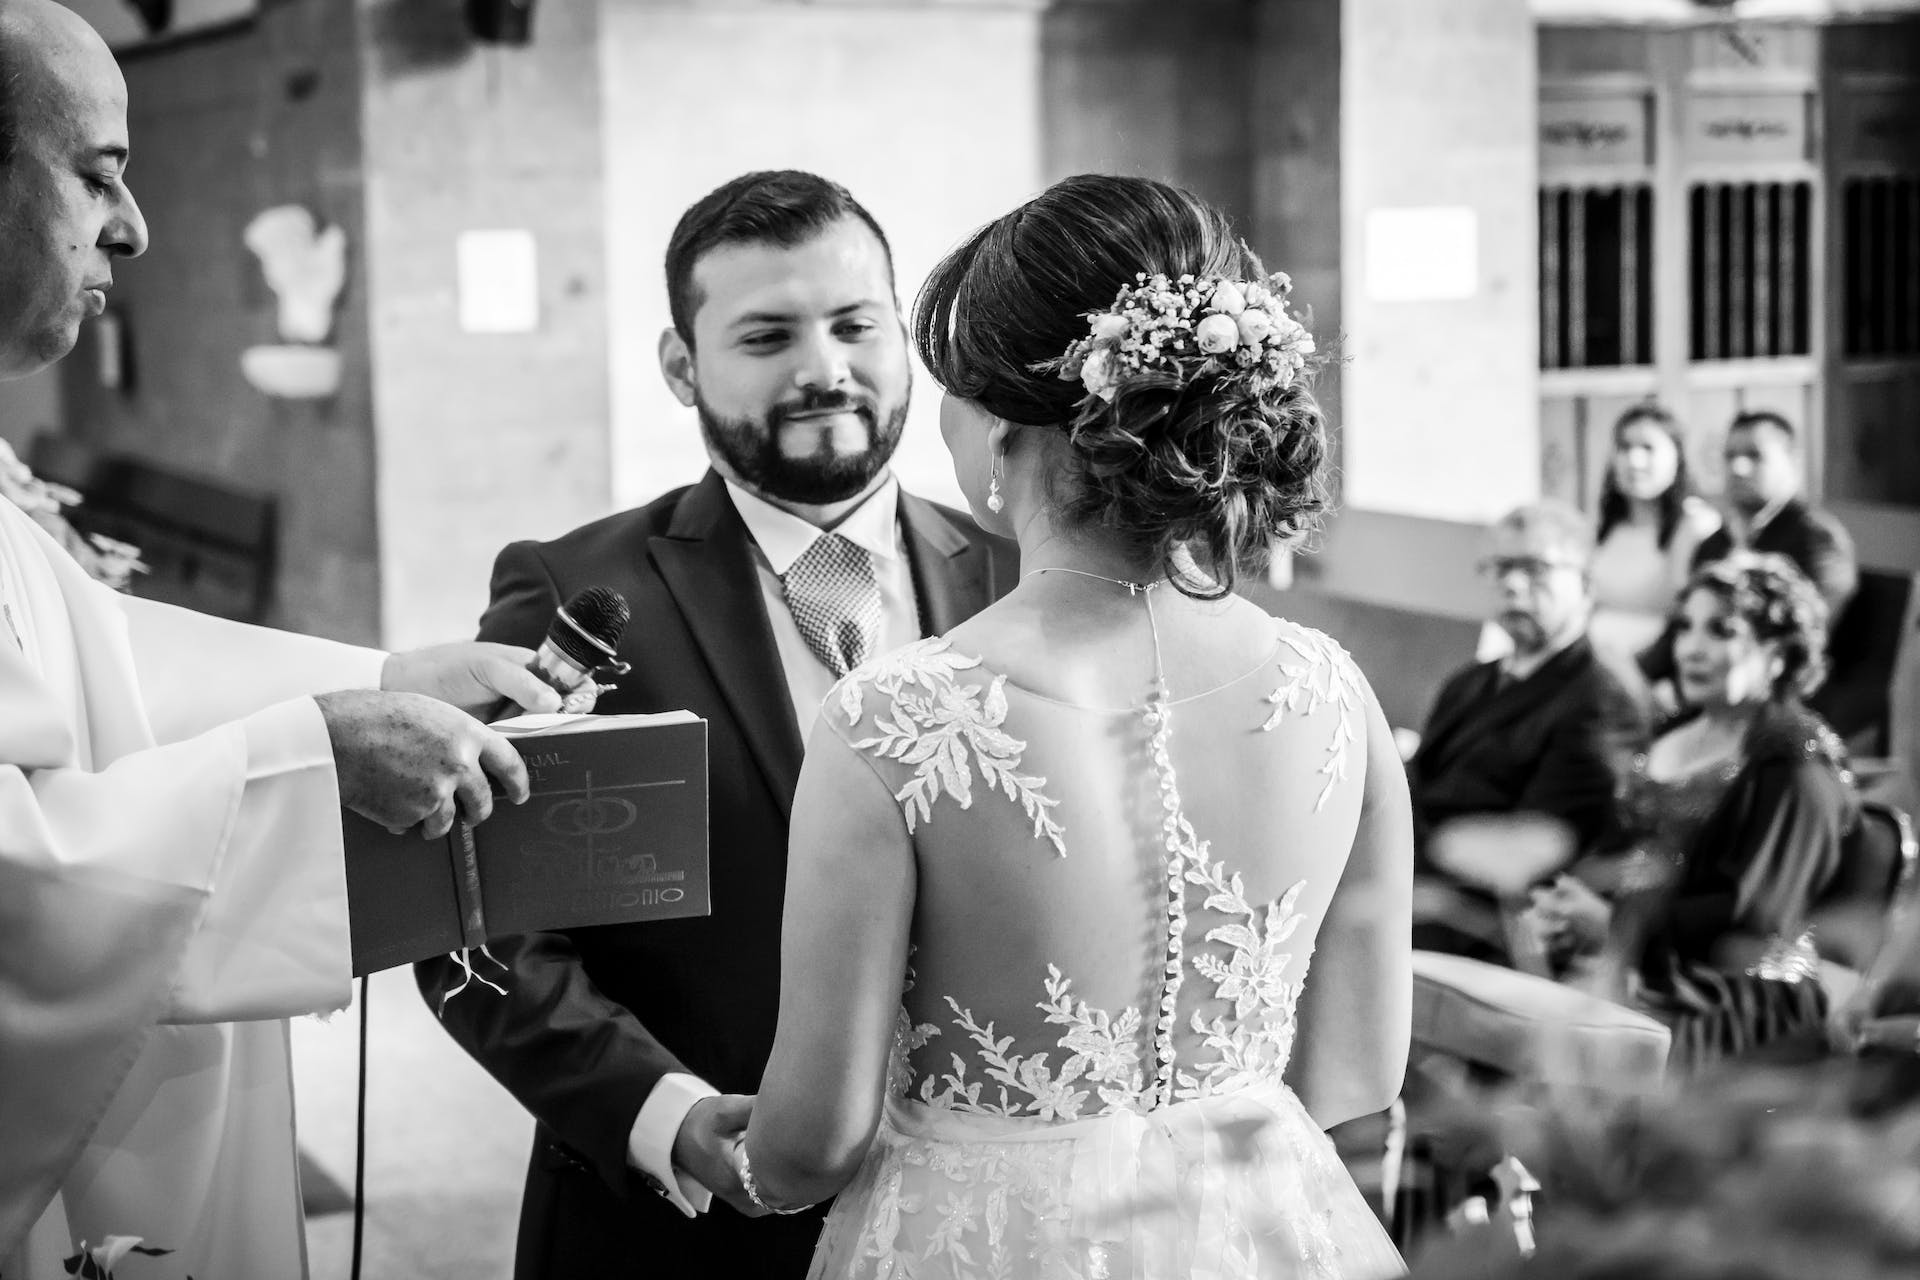 A wedding ceremony | Source: Pexels